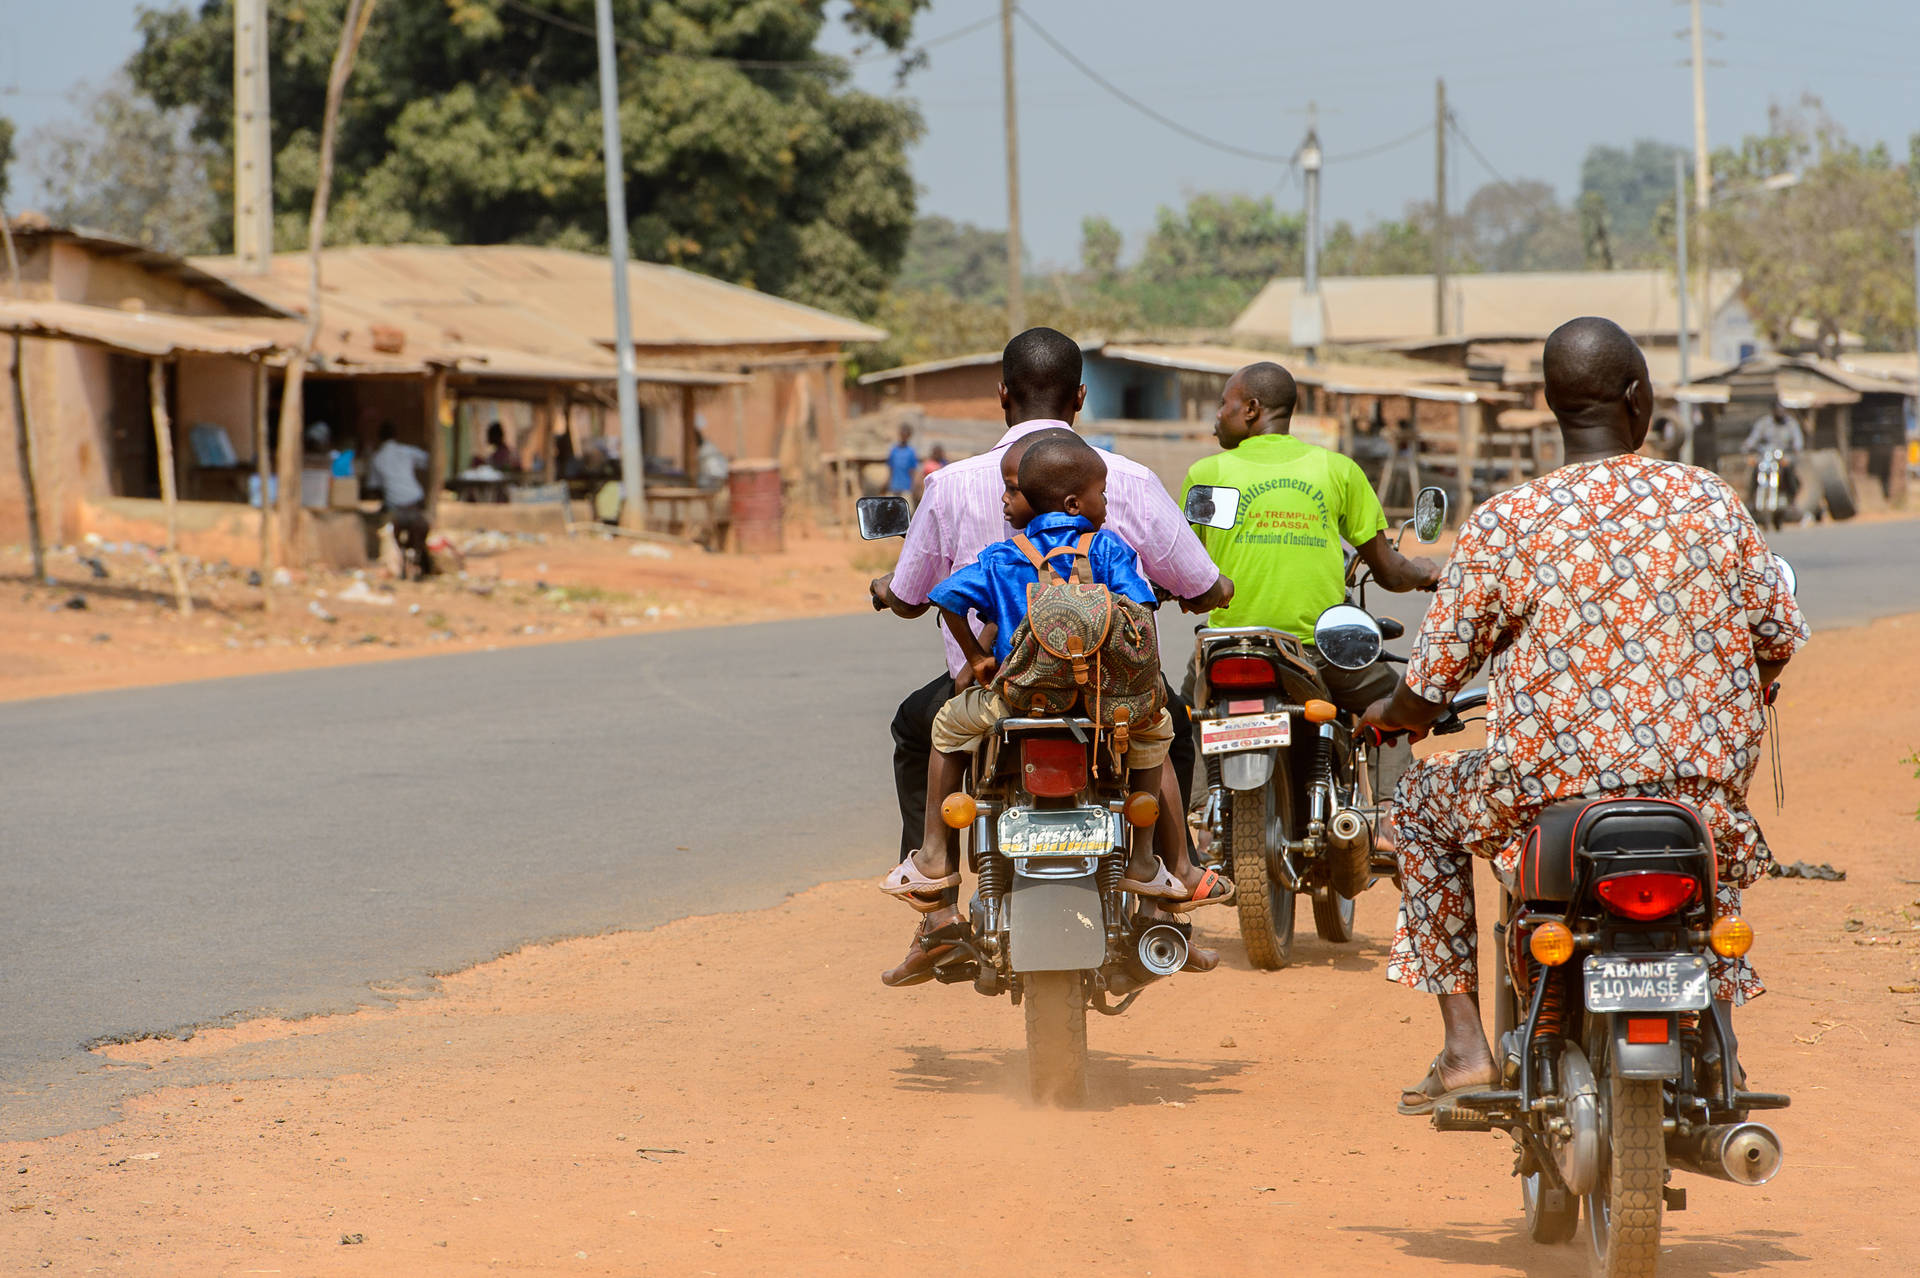 Benin Motorcycle Riders Background